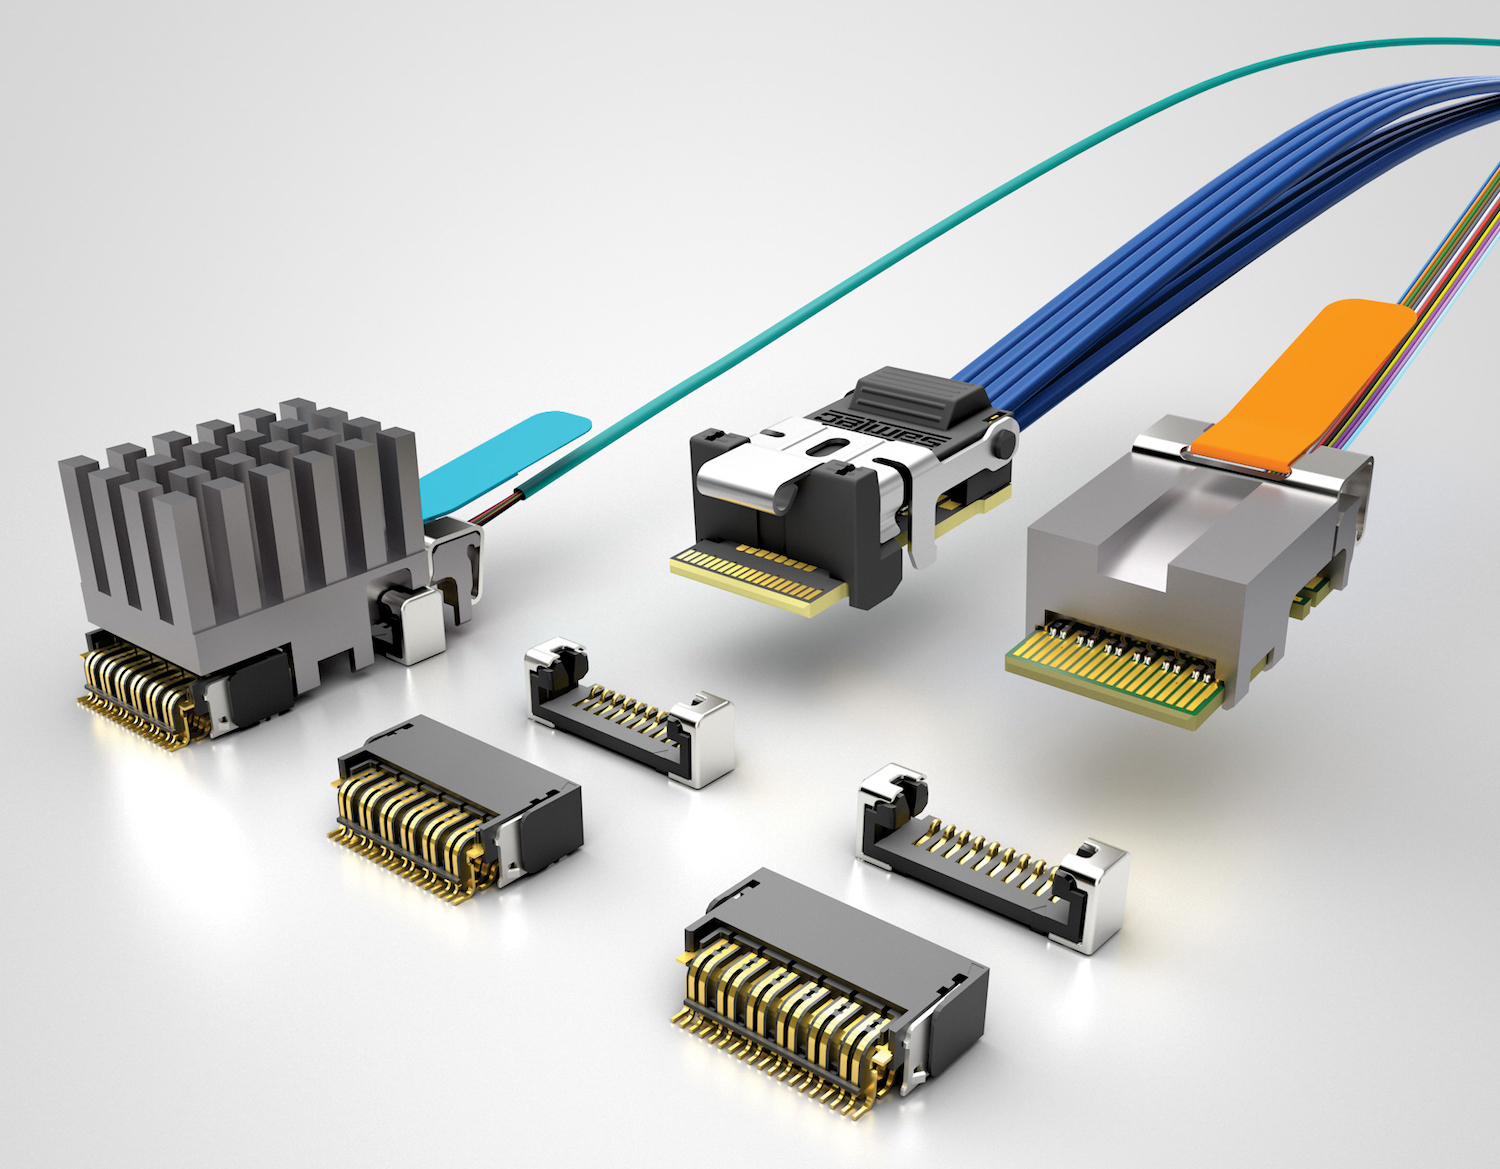 optical connectors from Samtec